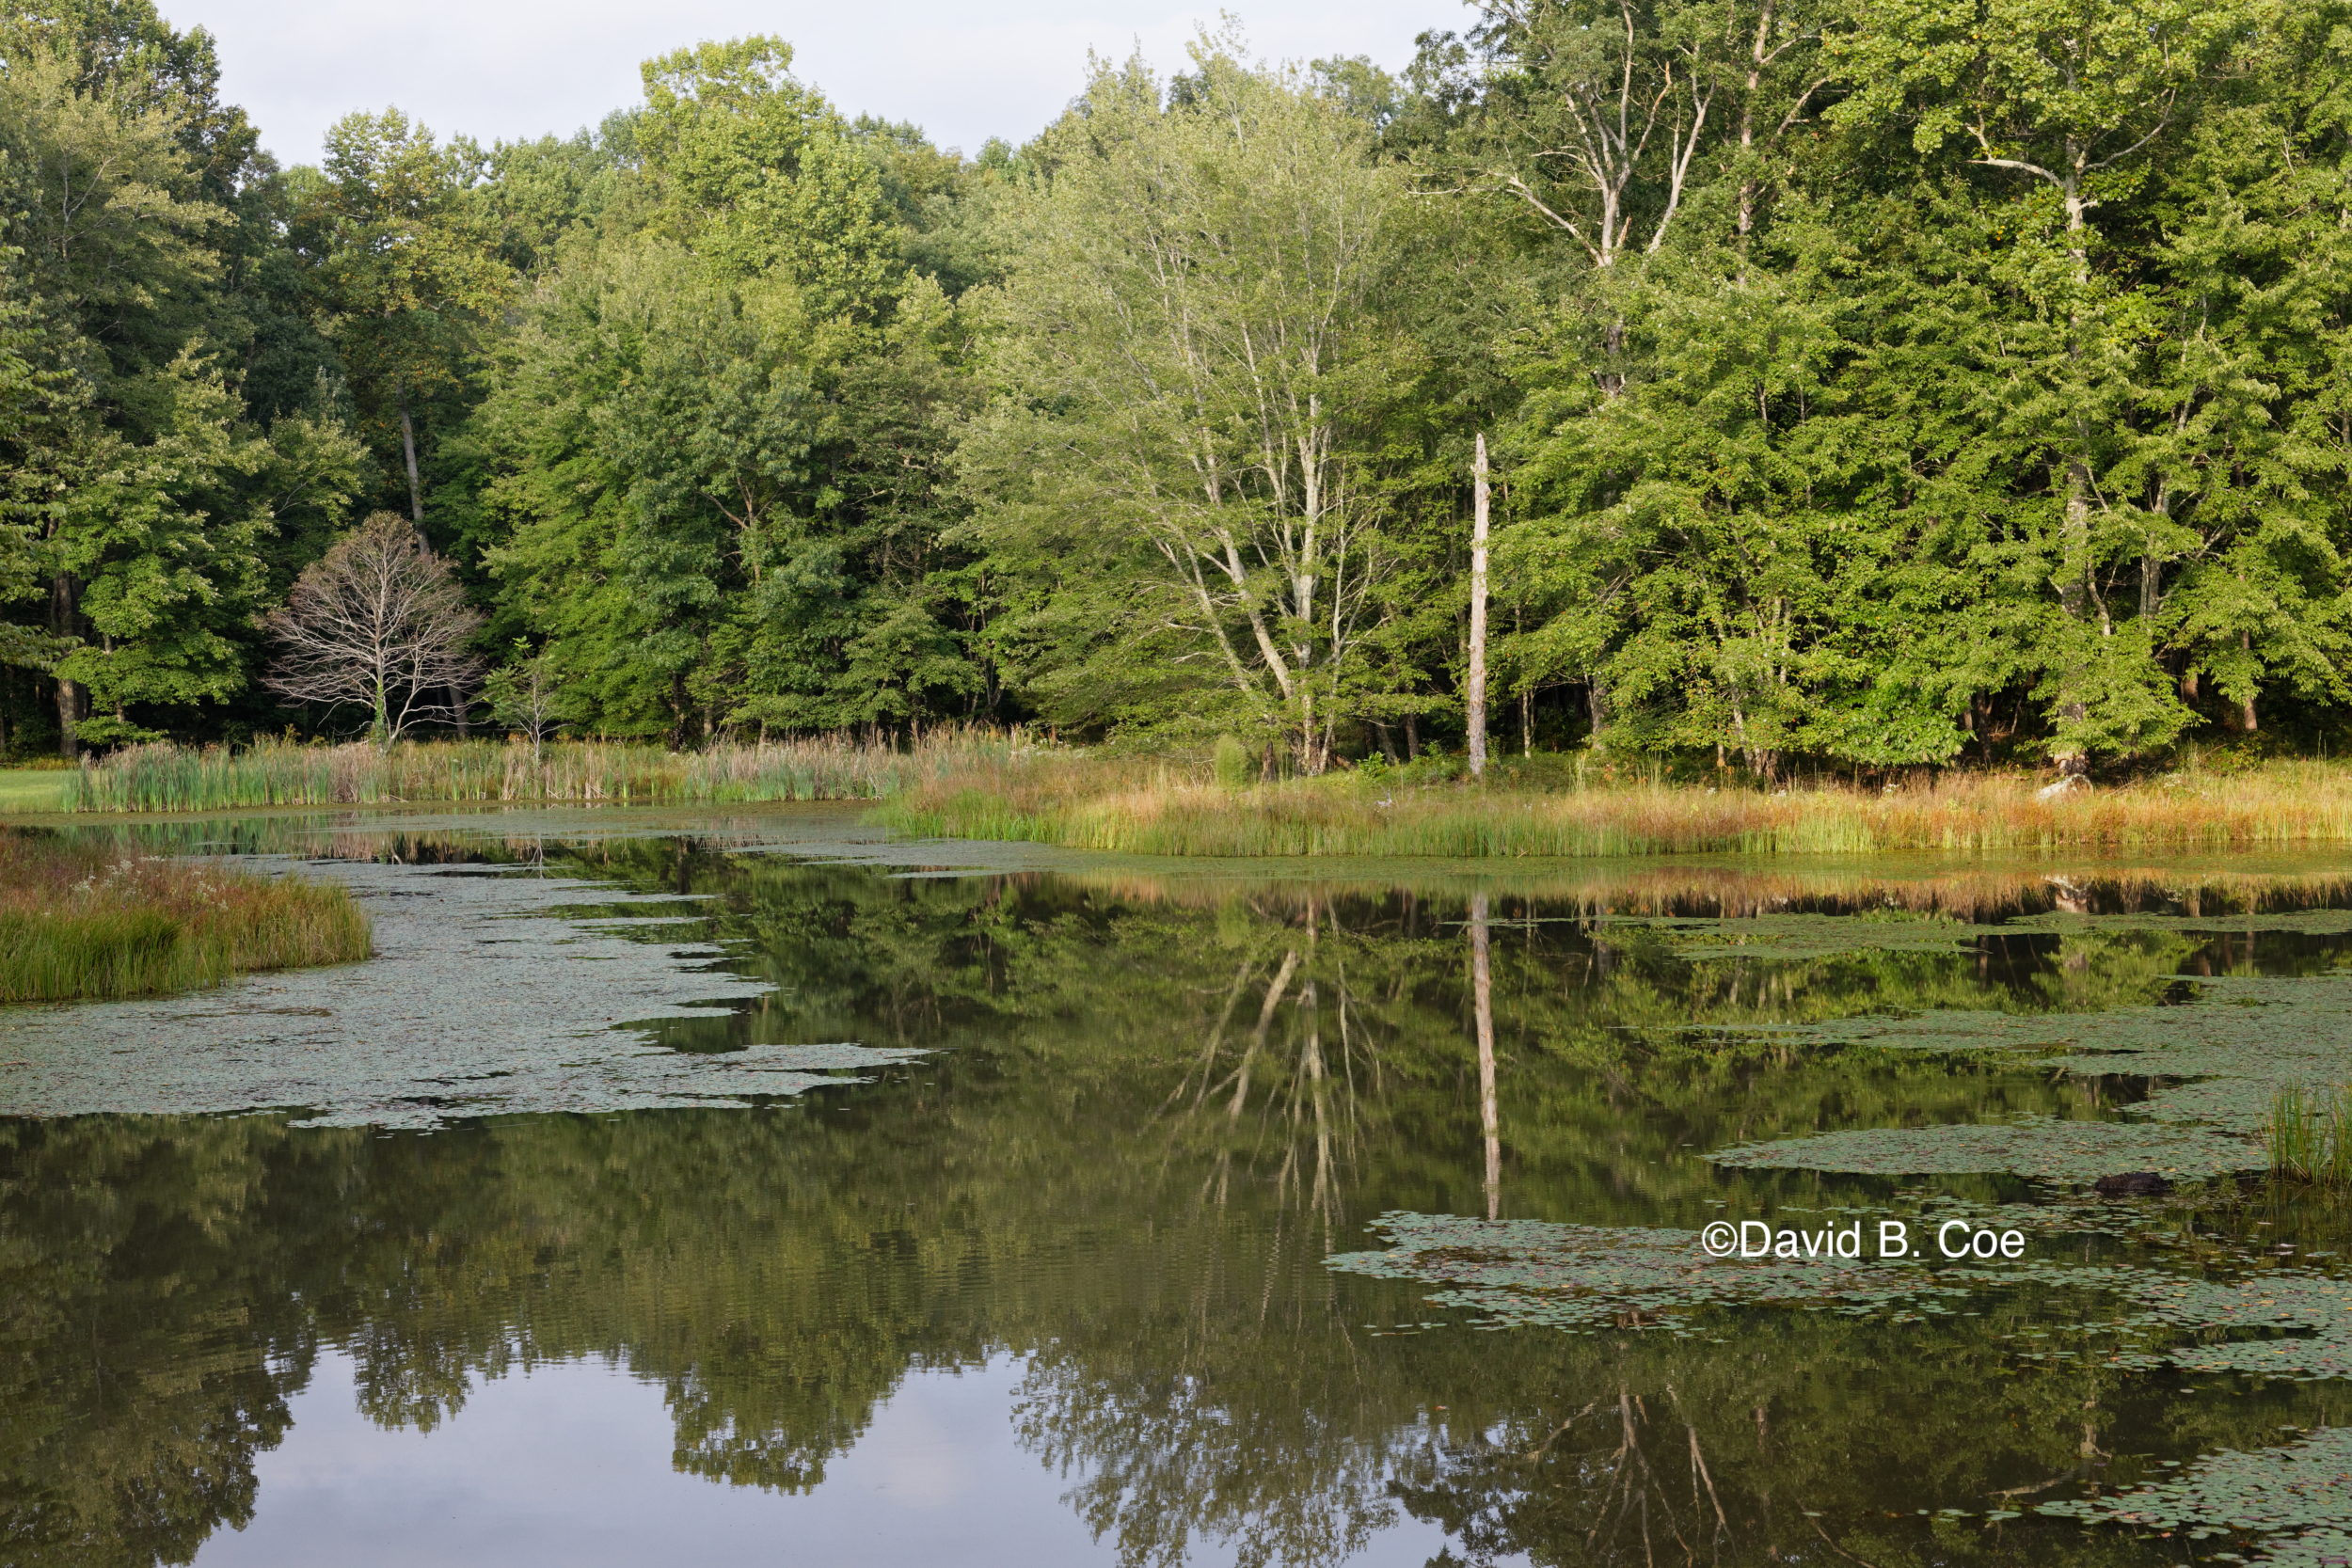 Pond Reflections, by David B. Coe